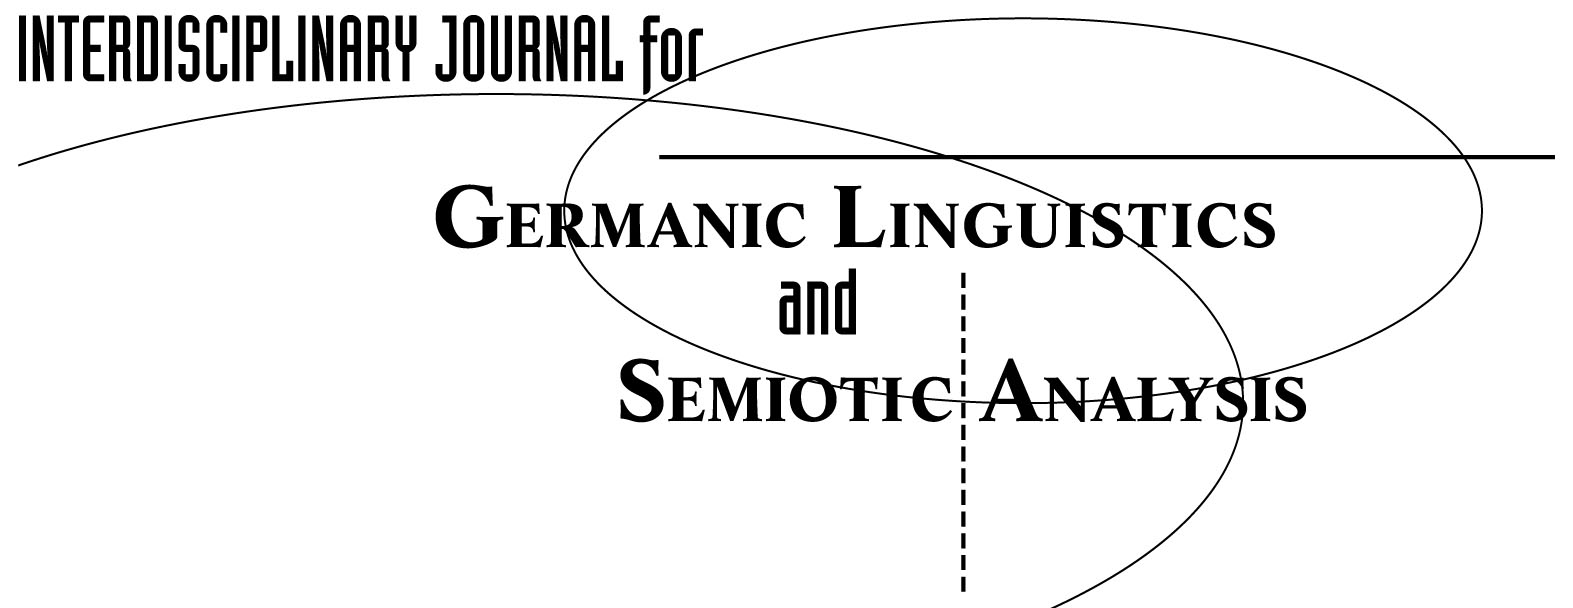 Interdisciplinary Journal for Germanic Linguistics and Semiotic Analysis